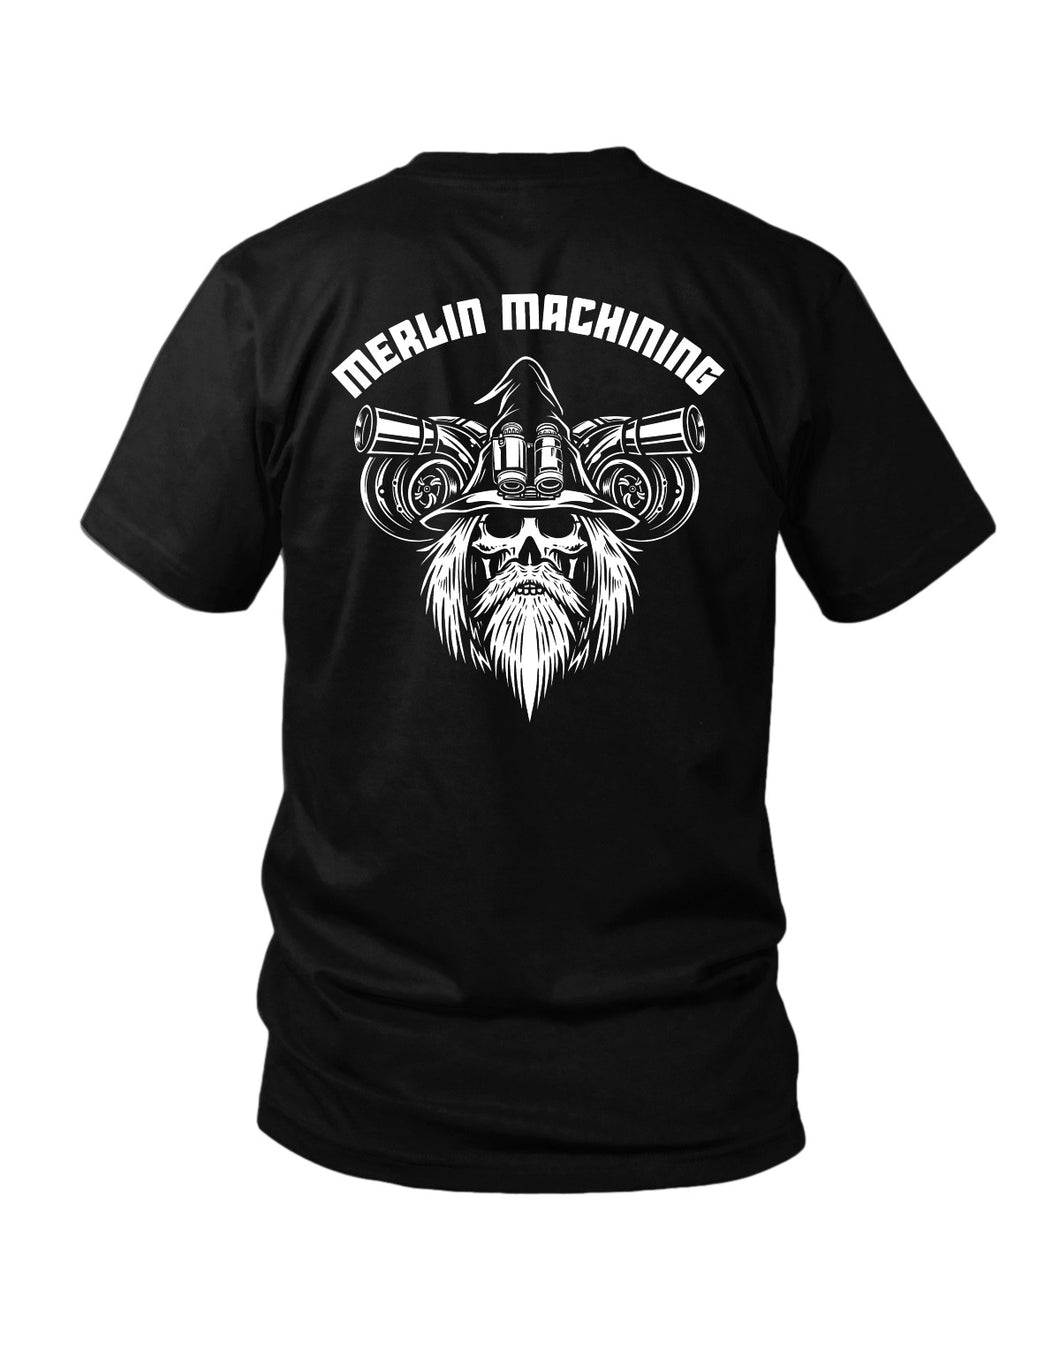 Merlin Machining t-shirts